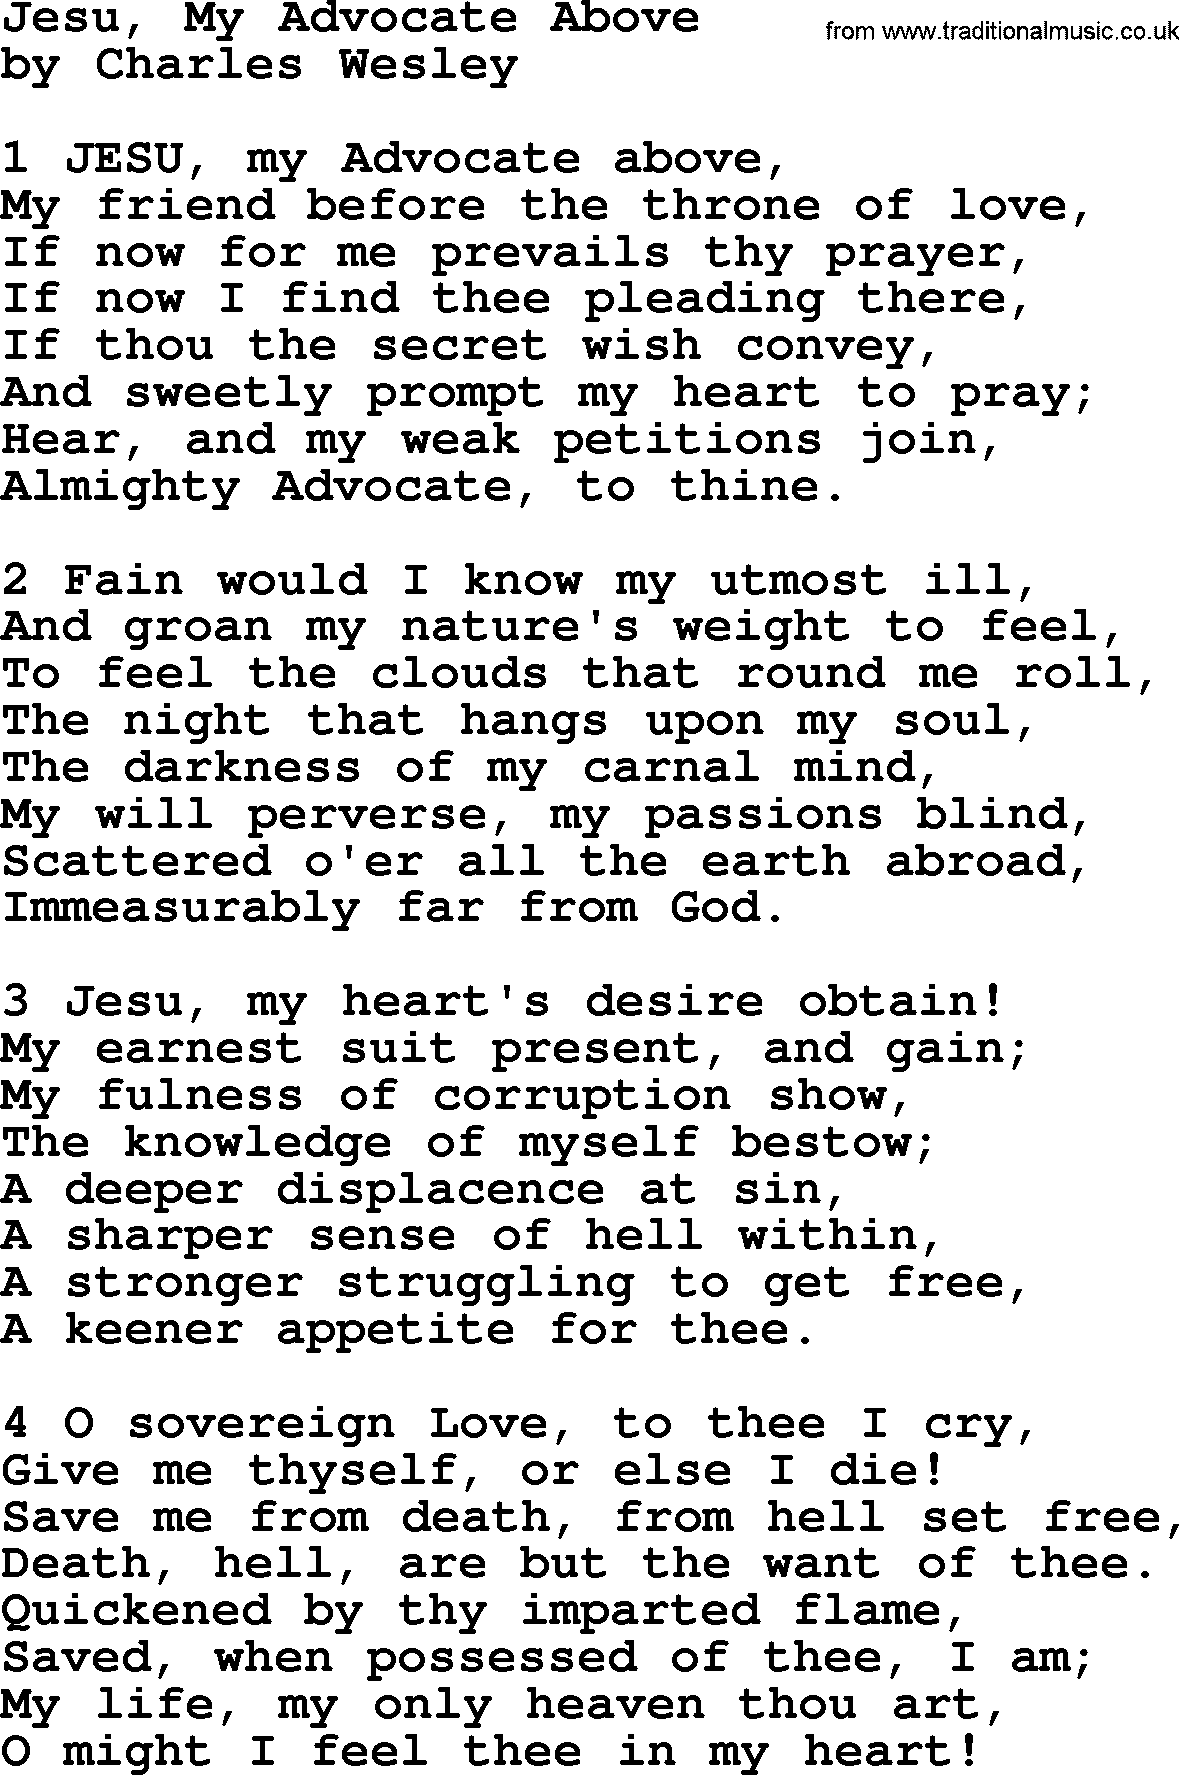 Charles Wesley hymn: Jesu, My Advocate Above, lyrics